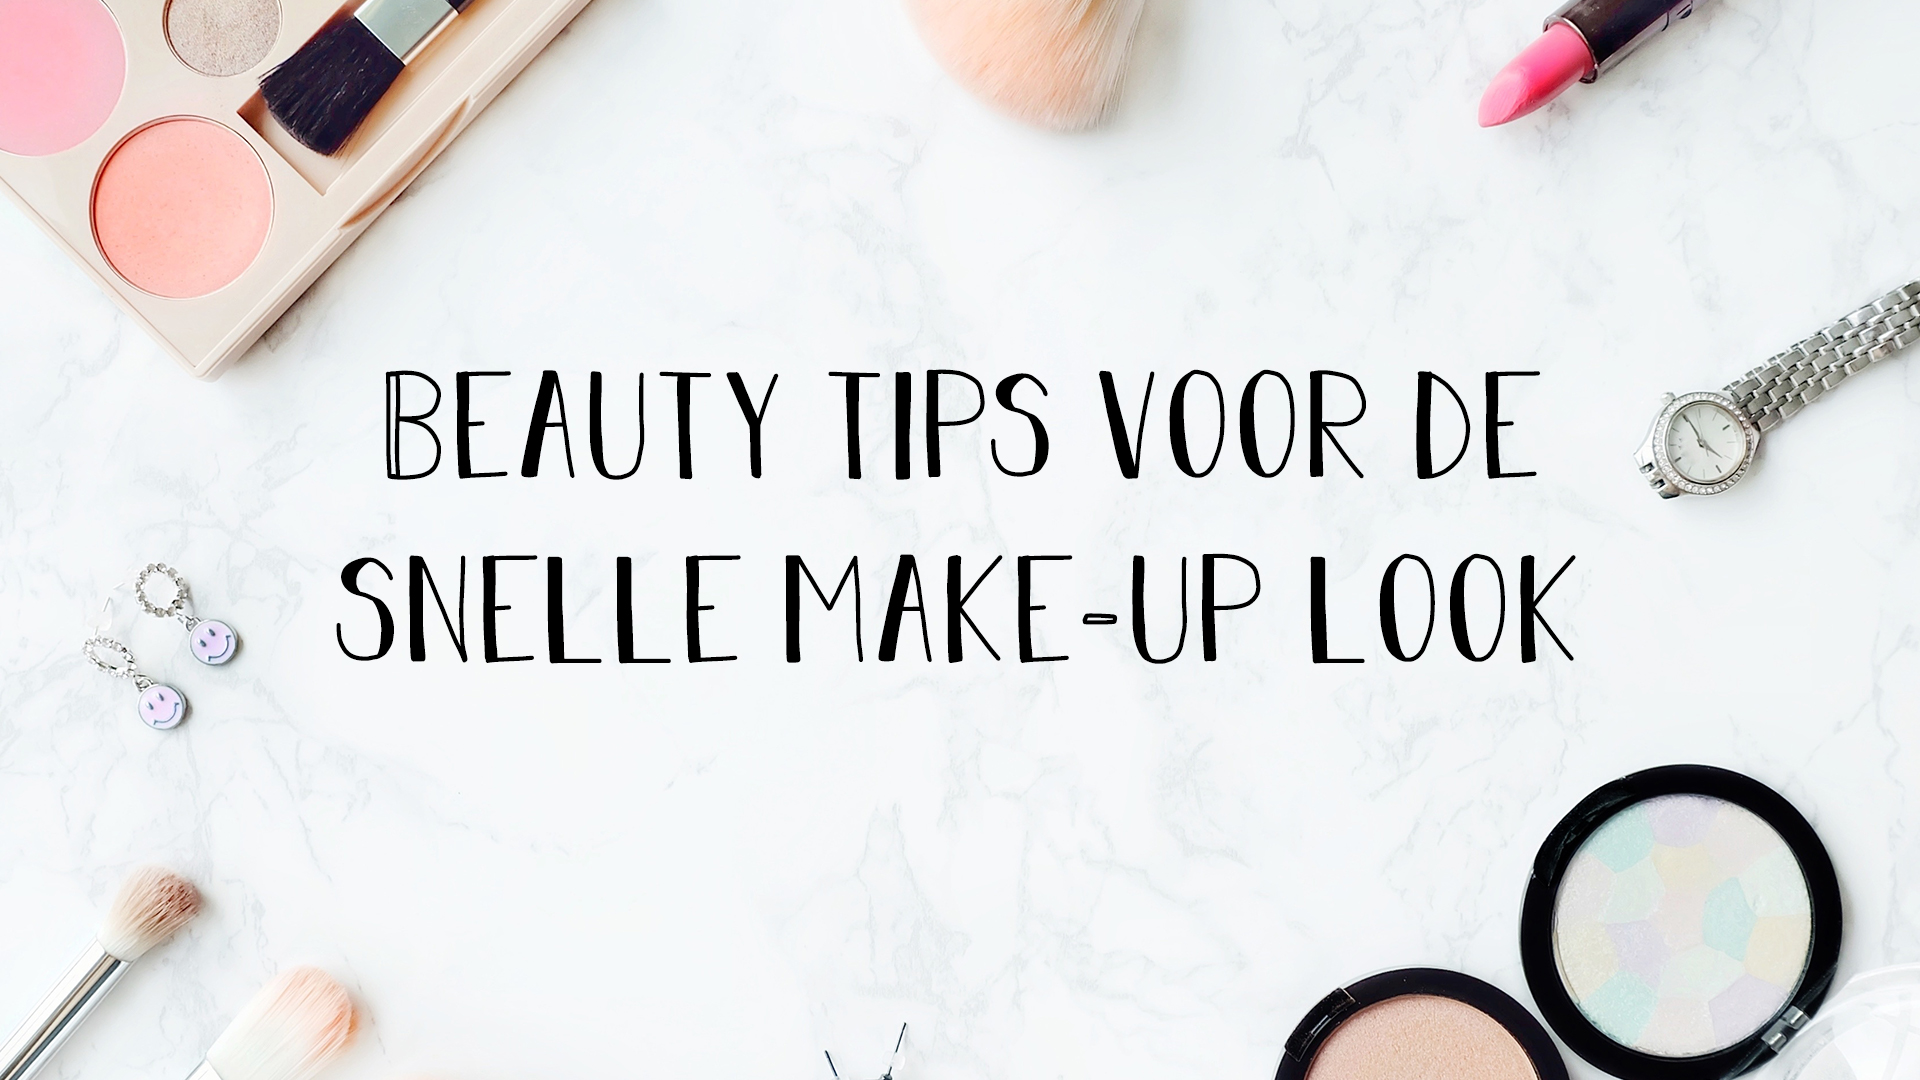 Make-up tips